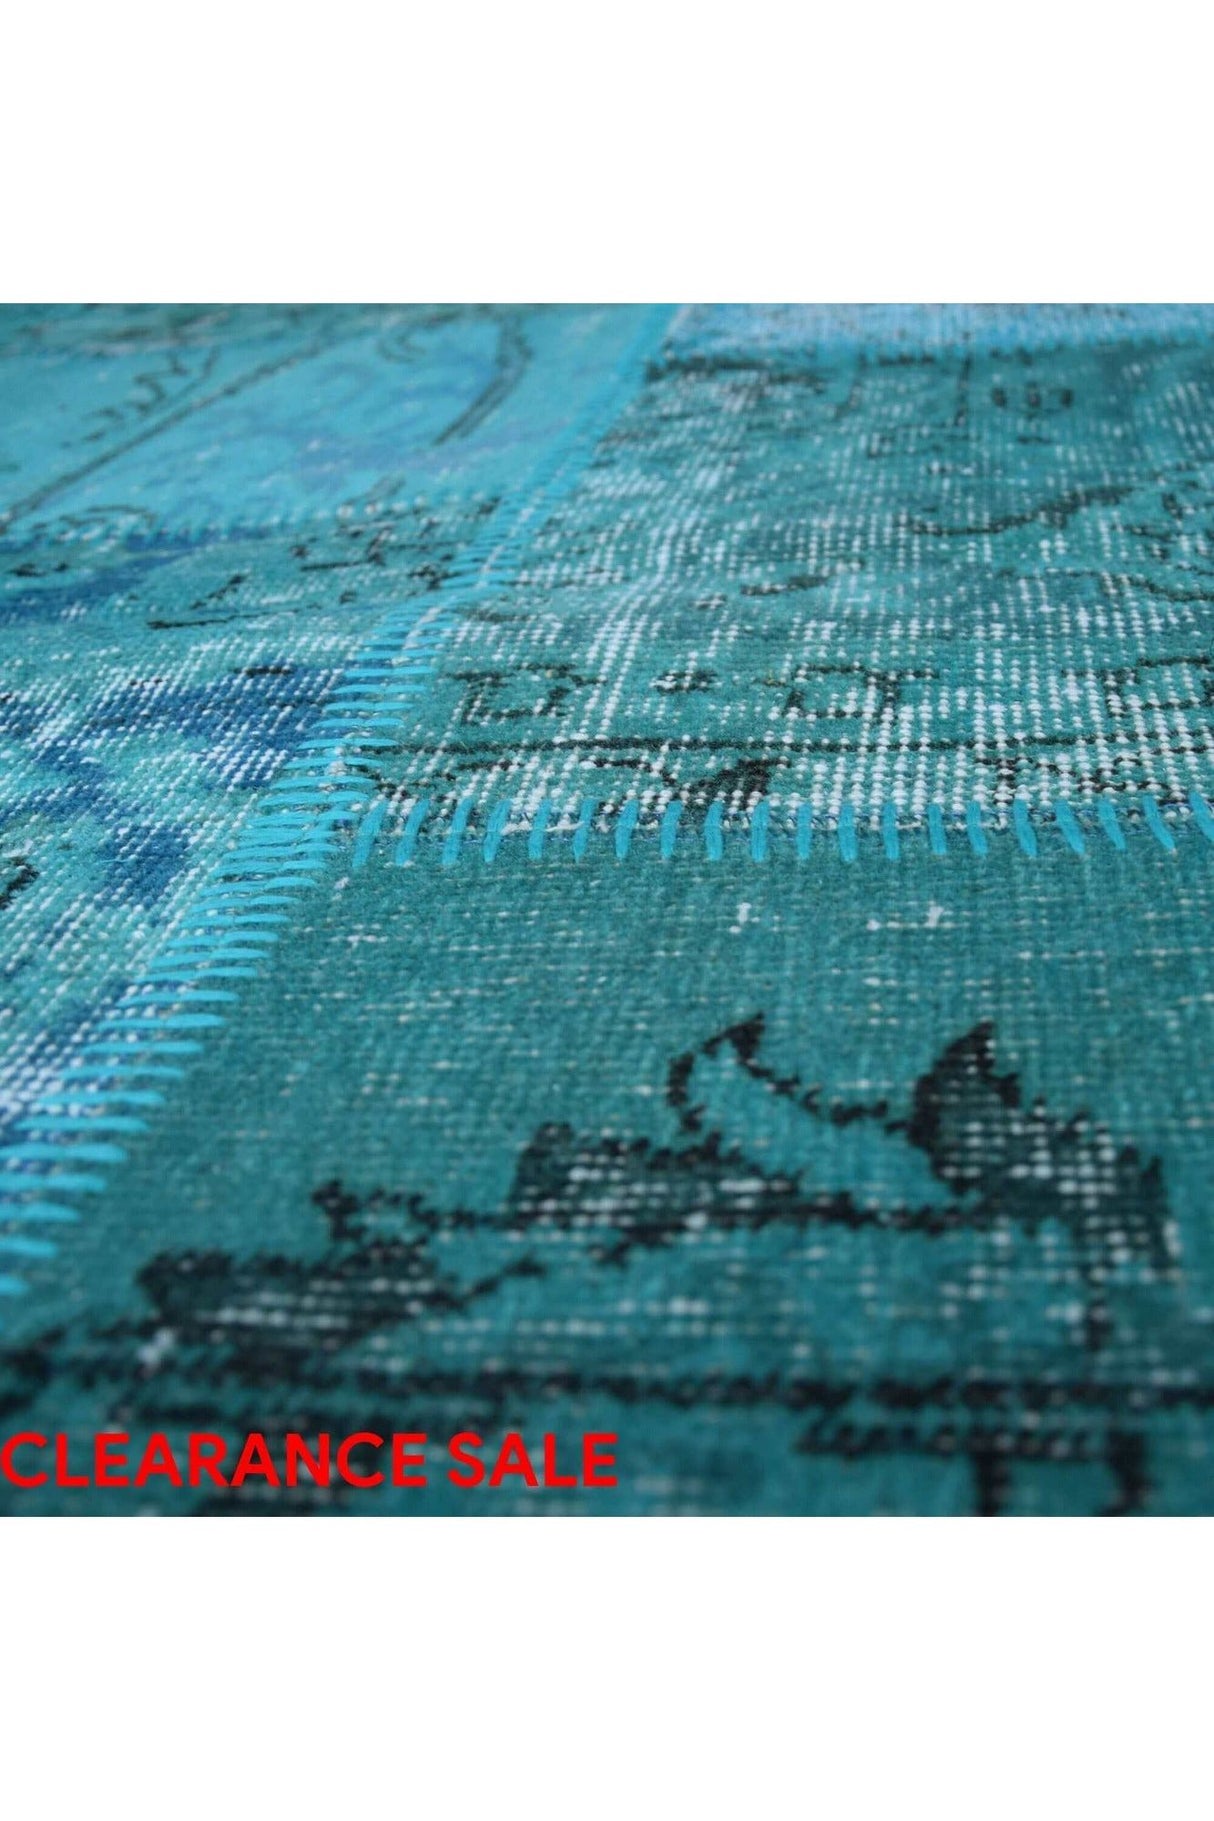 #Turkish_Carpets_Rugs# #Modern_Carpets# #Abrash_Carpets#350X300 Cm Bursa Handmade Patchwork Rug Pw048